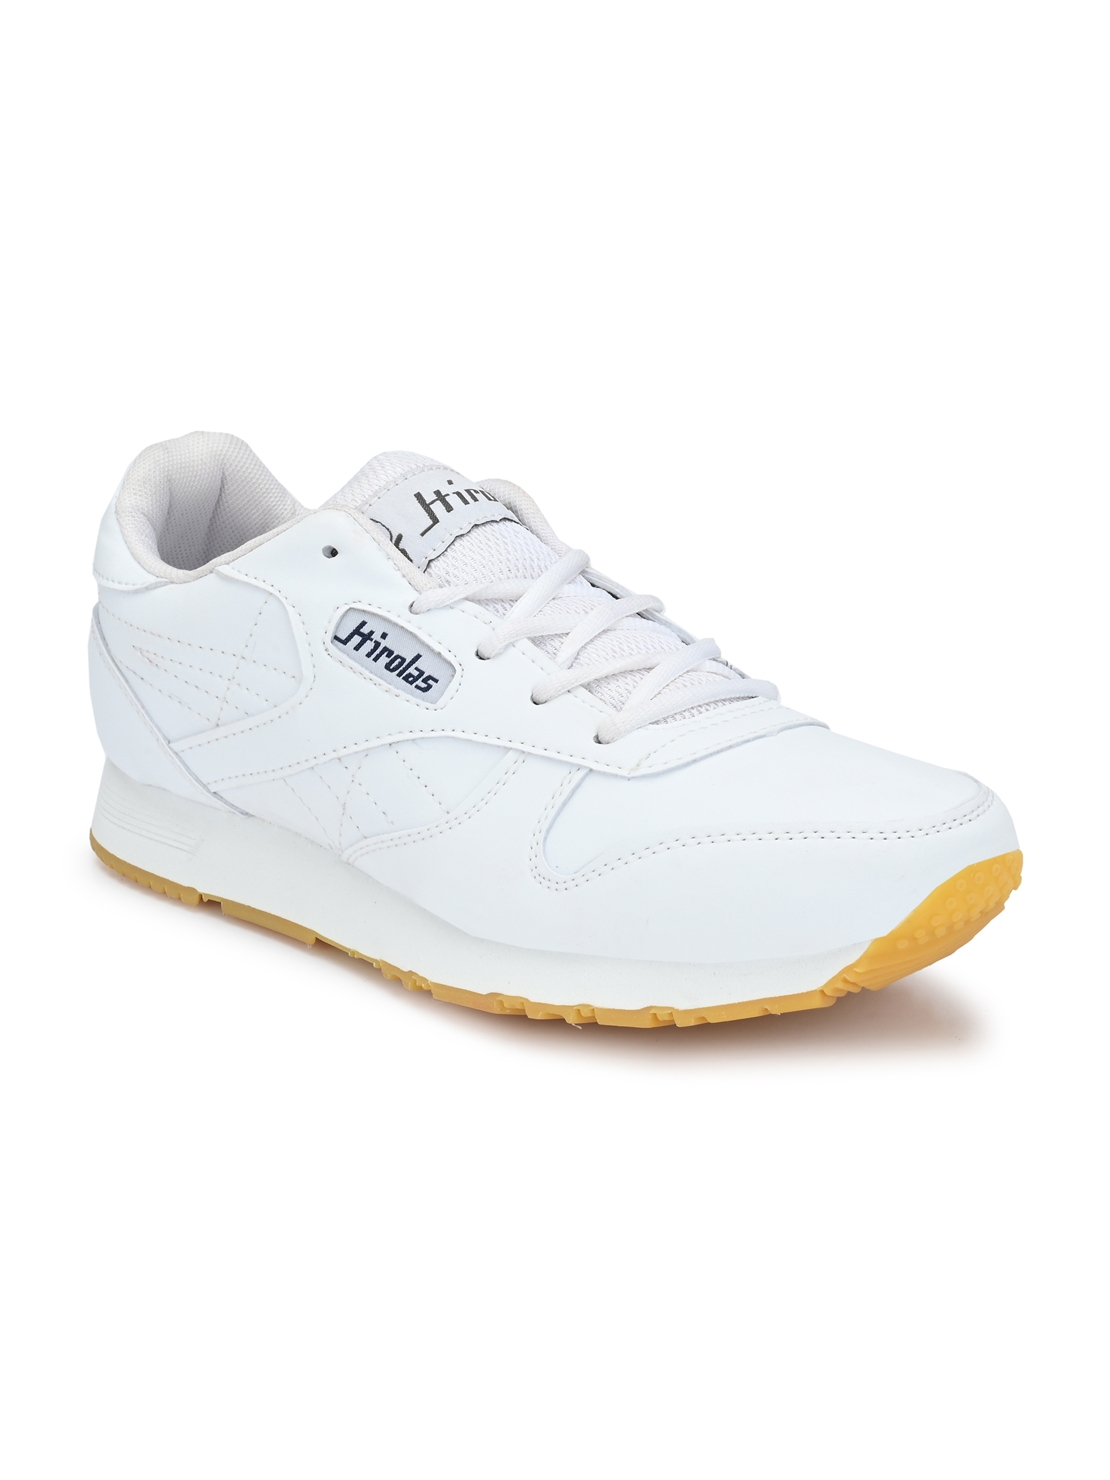 Hirolas | Hirolas Men's Multisport Sneaker Shoes- White